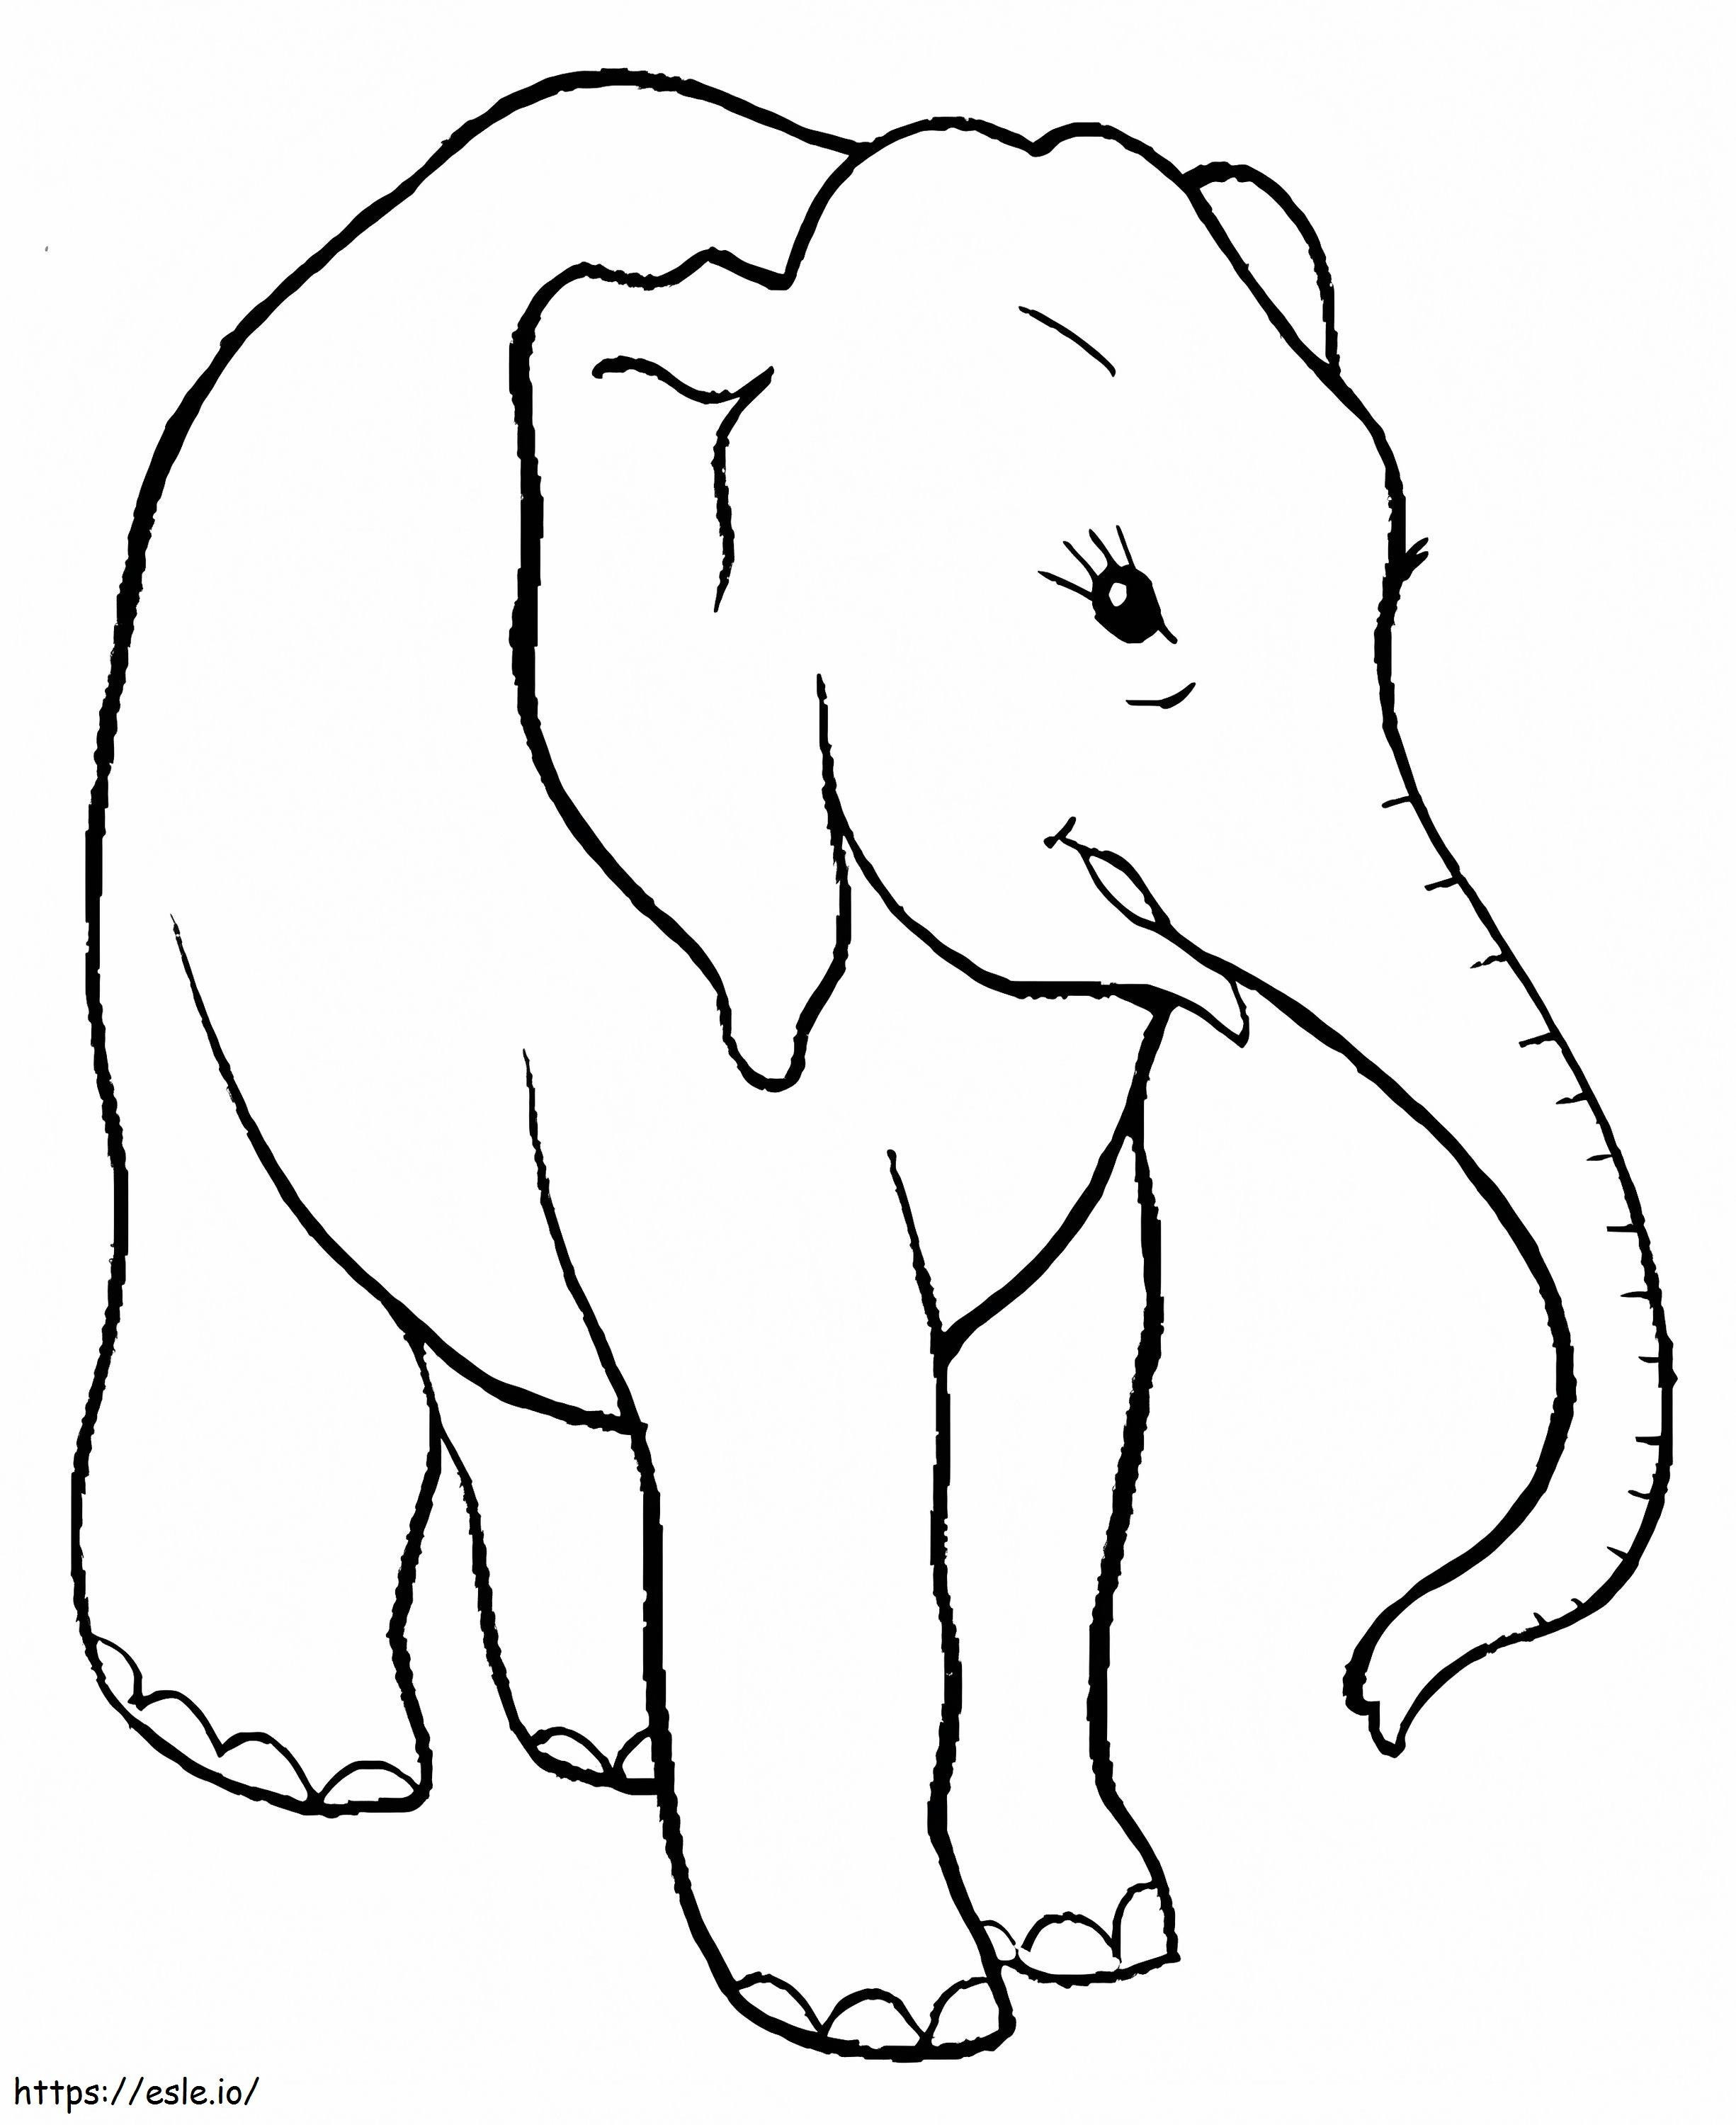 Elefante para imprimir gratis para colorear